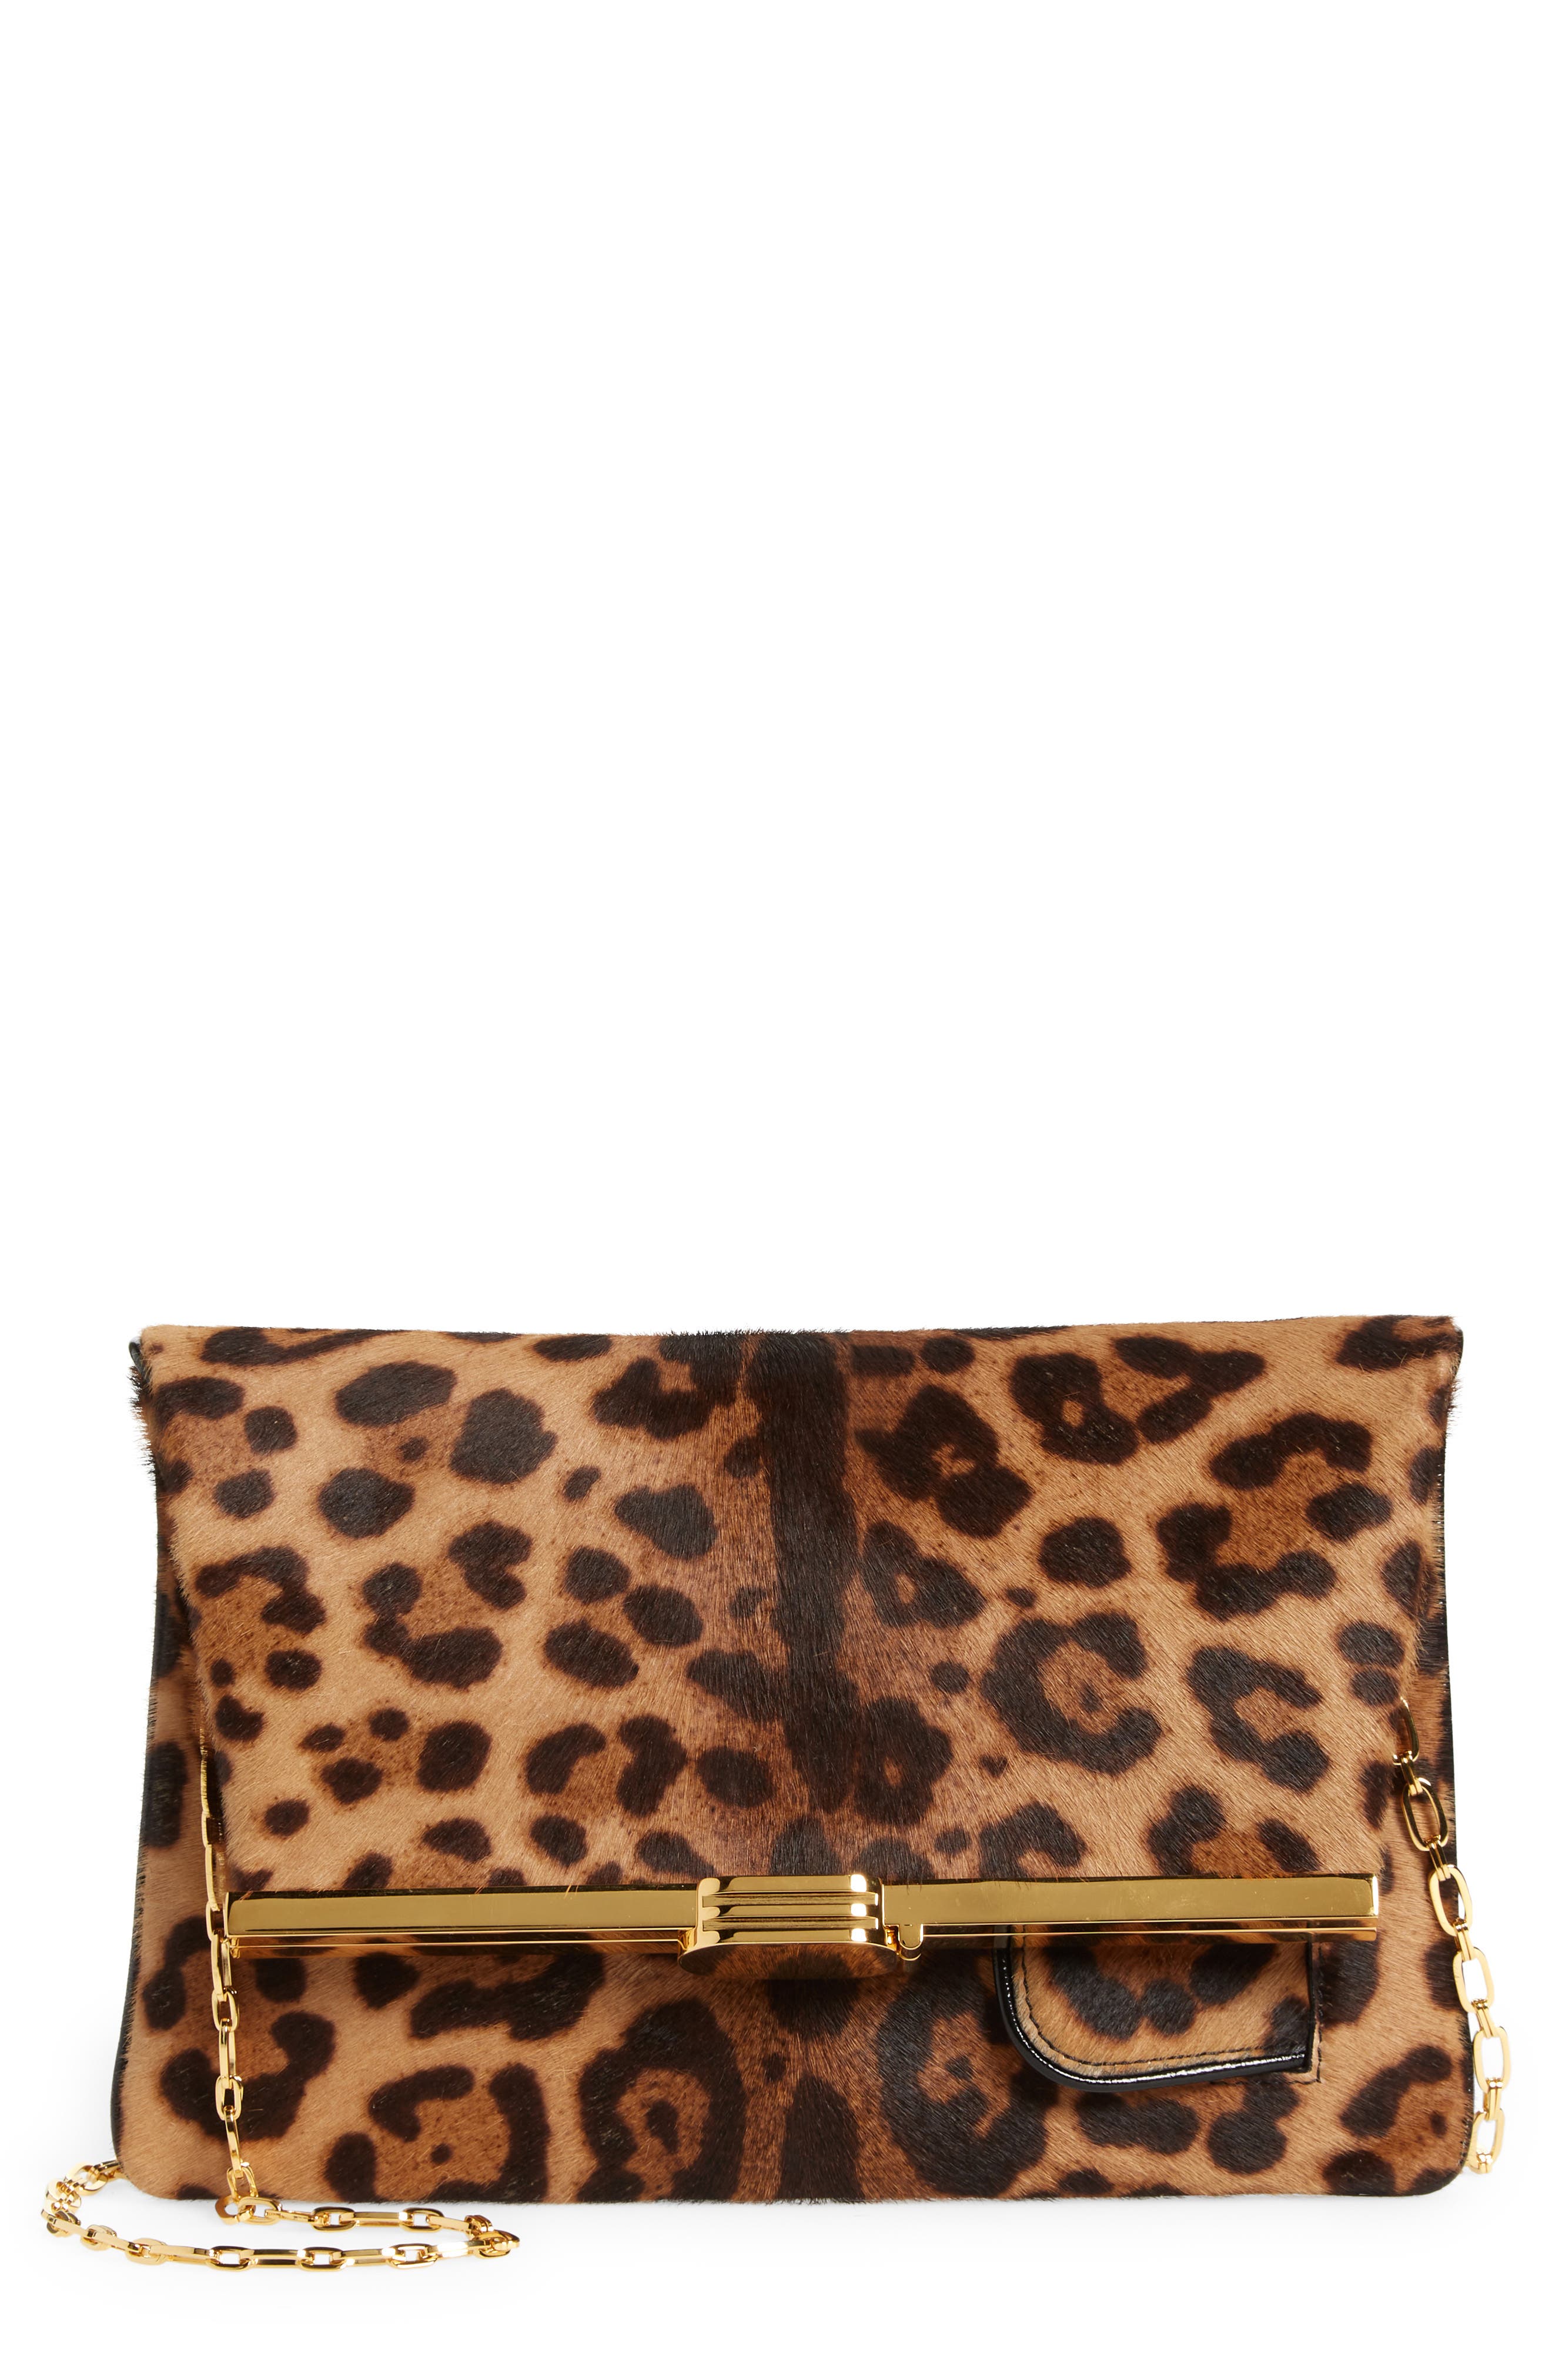 Bienen Davis PM Leopard Print Genuine Calf Hair Shoulder Bag in Leopard Calf Hair/Gold